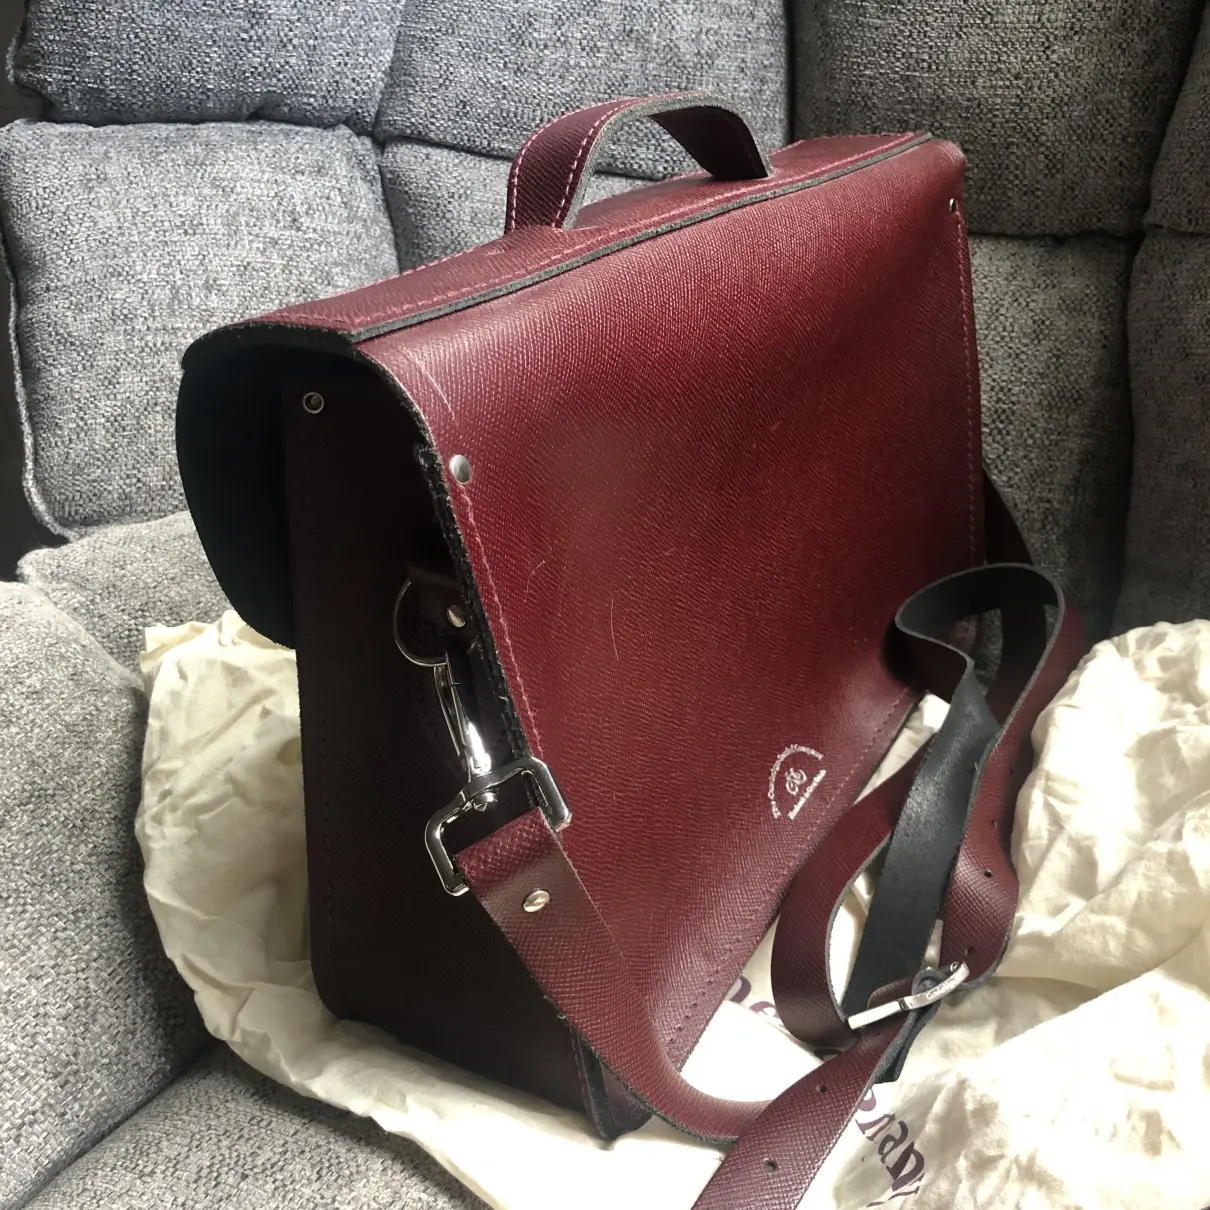 Buy Cambridge Satchel Company Leather handbag online